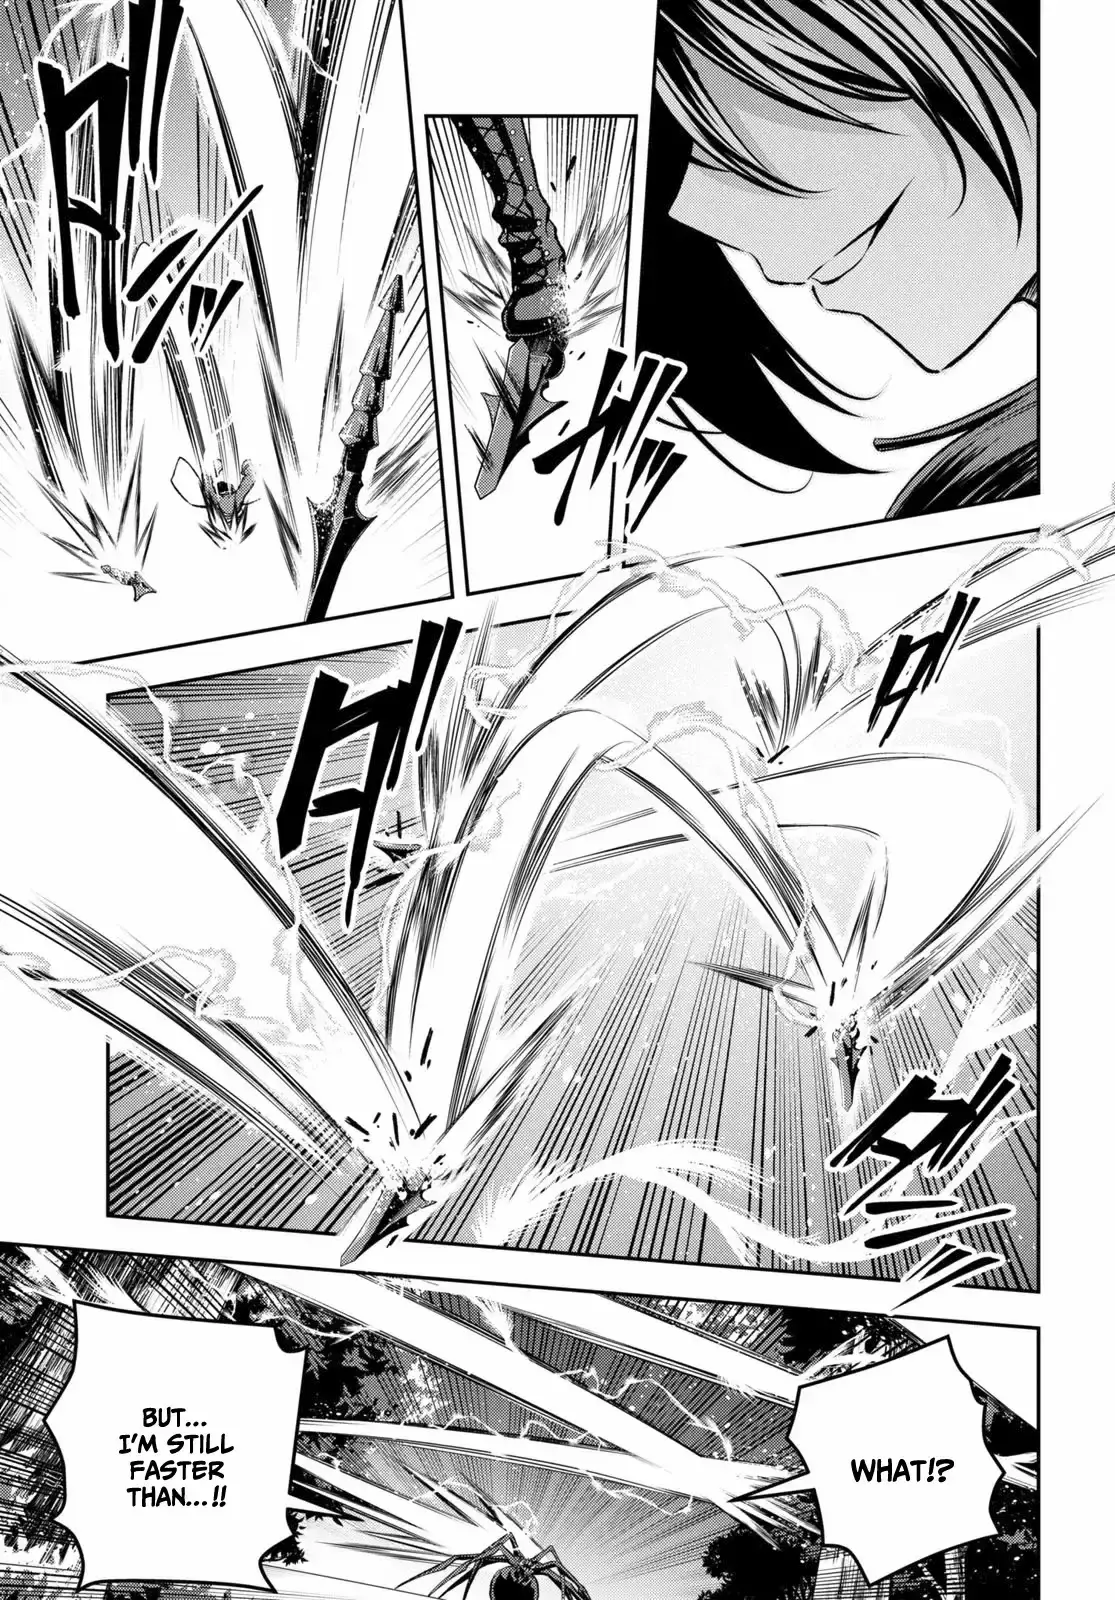 Demon's Sword Master Of Excalibur School - 34 page 9-87036aee